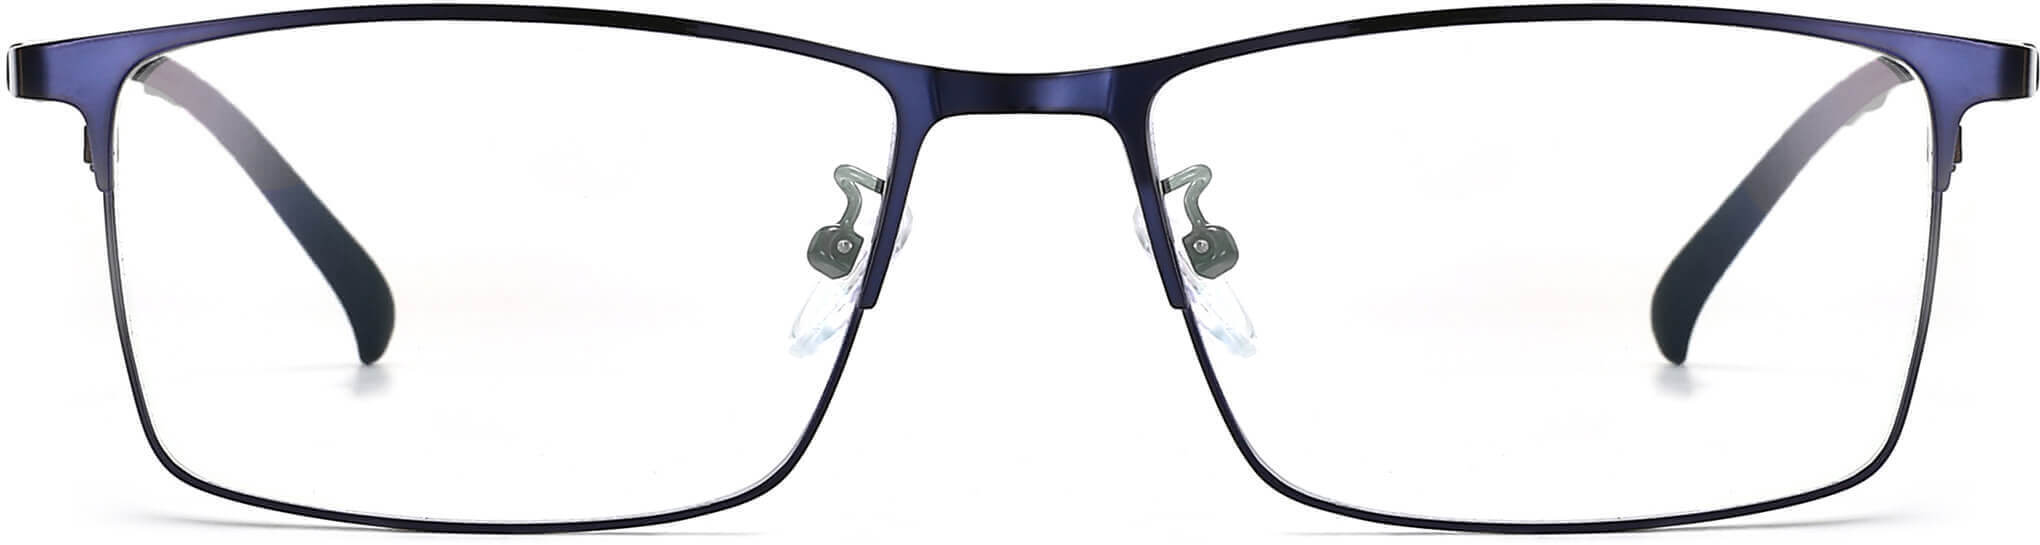 Futura rectangle blue metal frame Eyeglasses from ANRRI